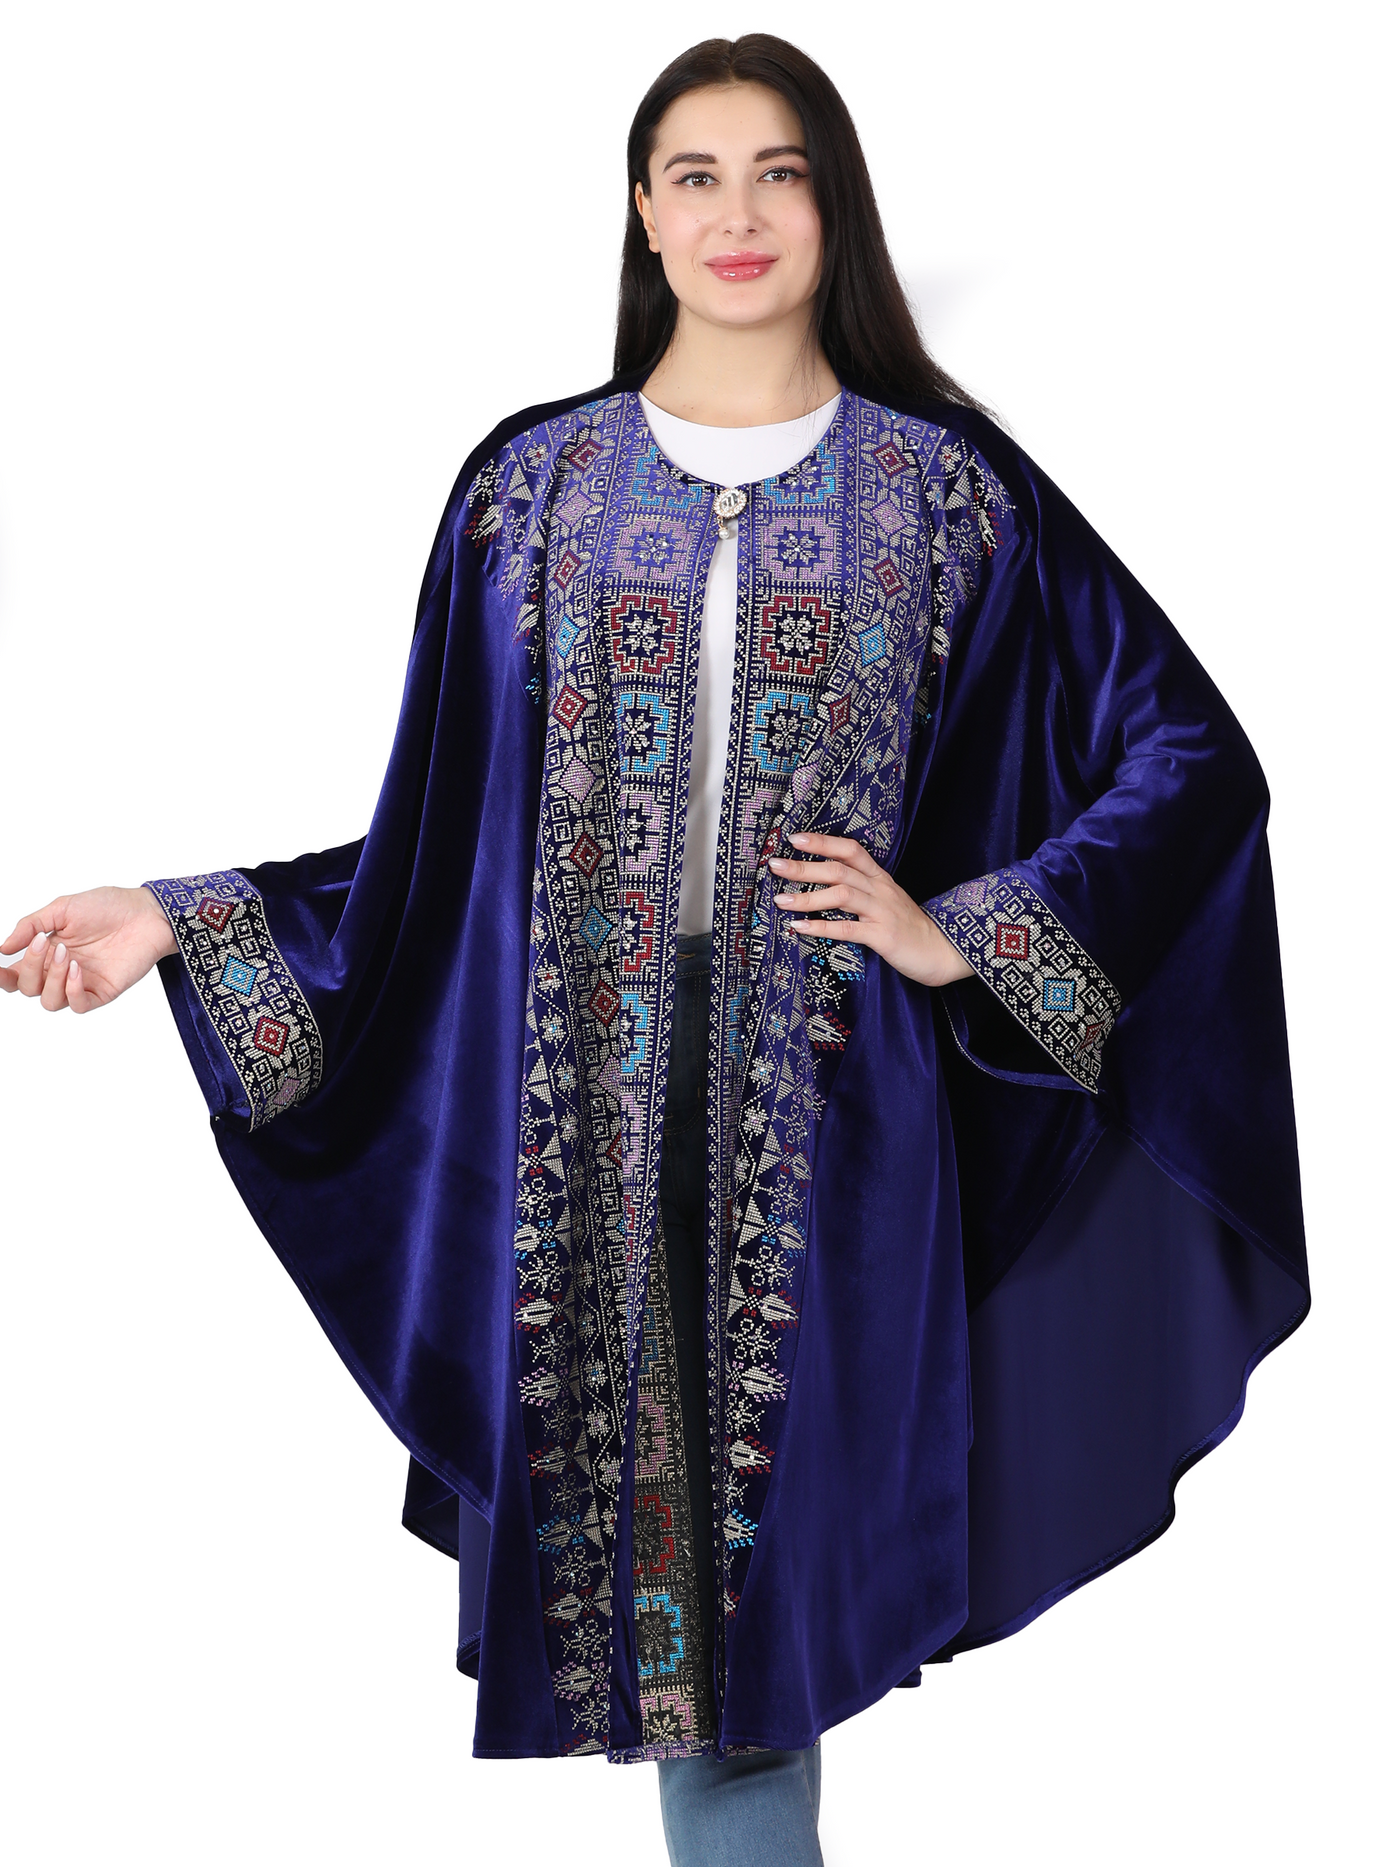 Embroidered Jacket/Shawl - (Free Size) High Quality Embroidered Palestinian style shawl/Jacket